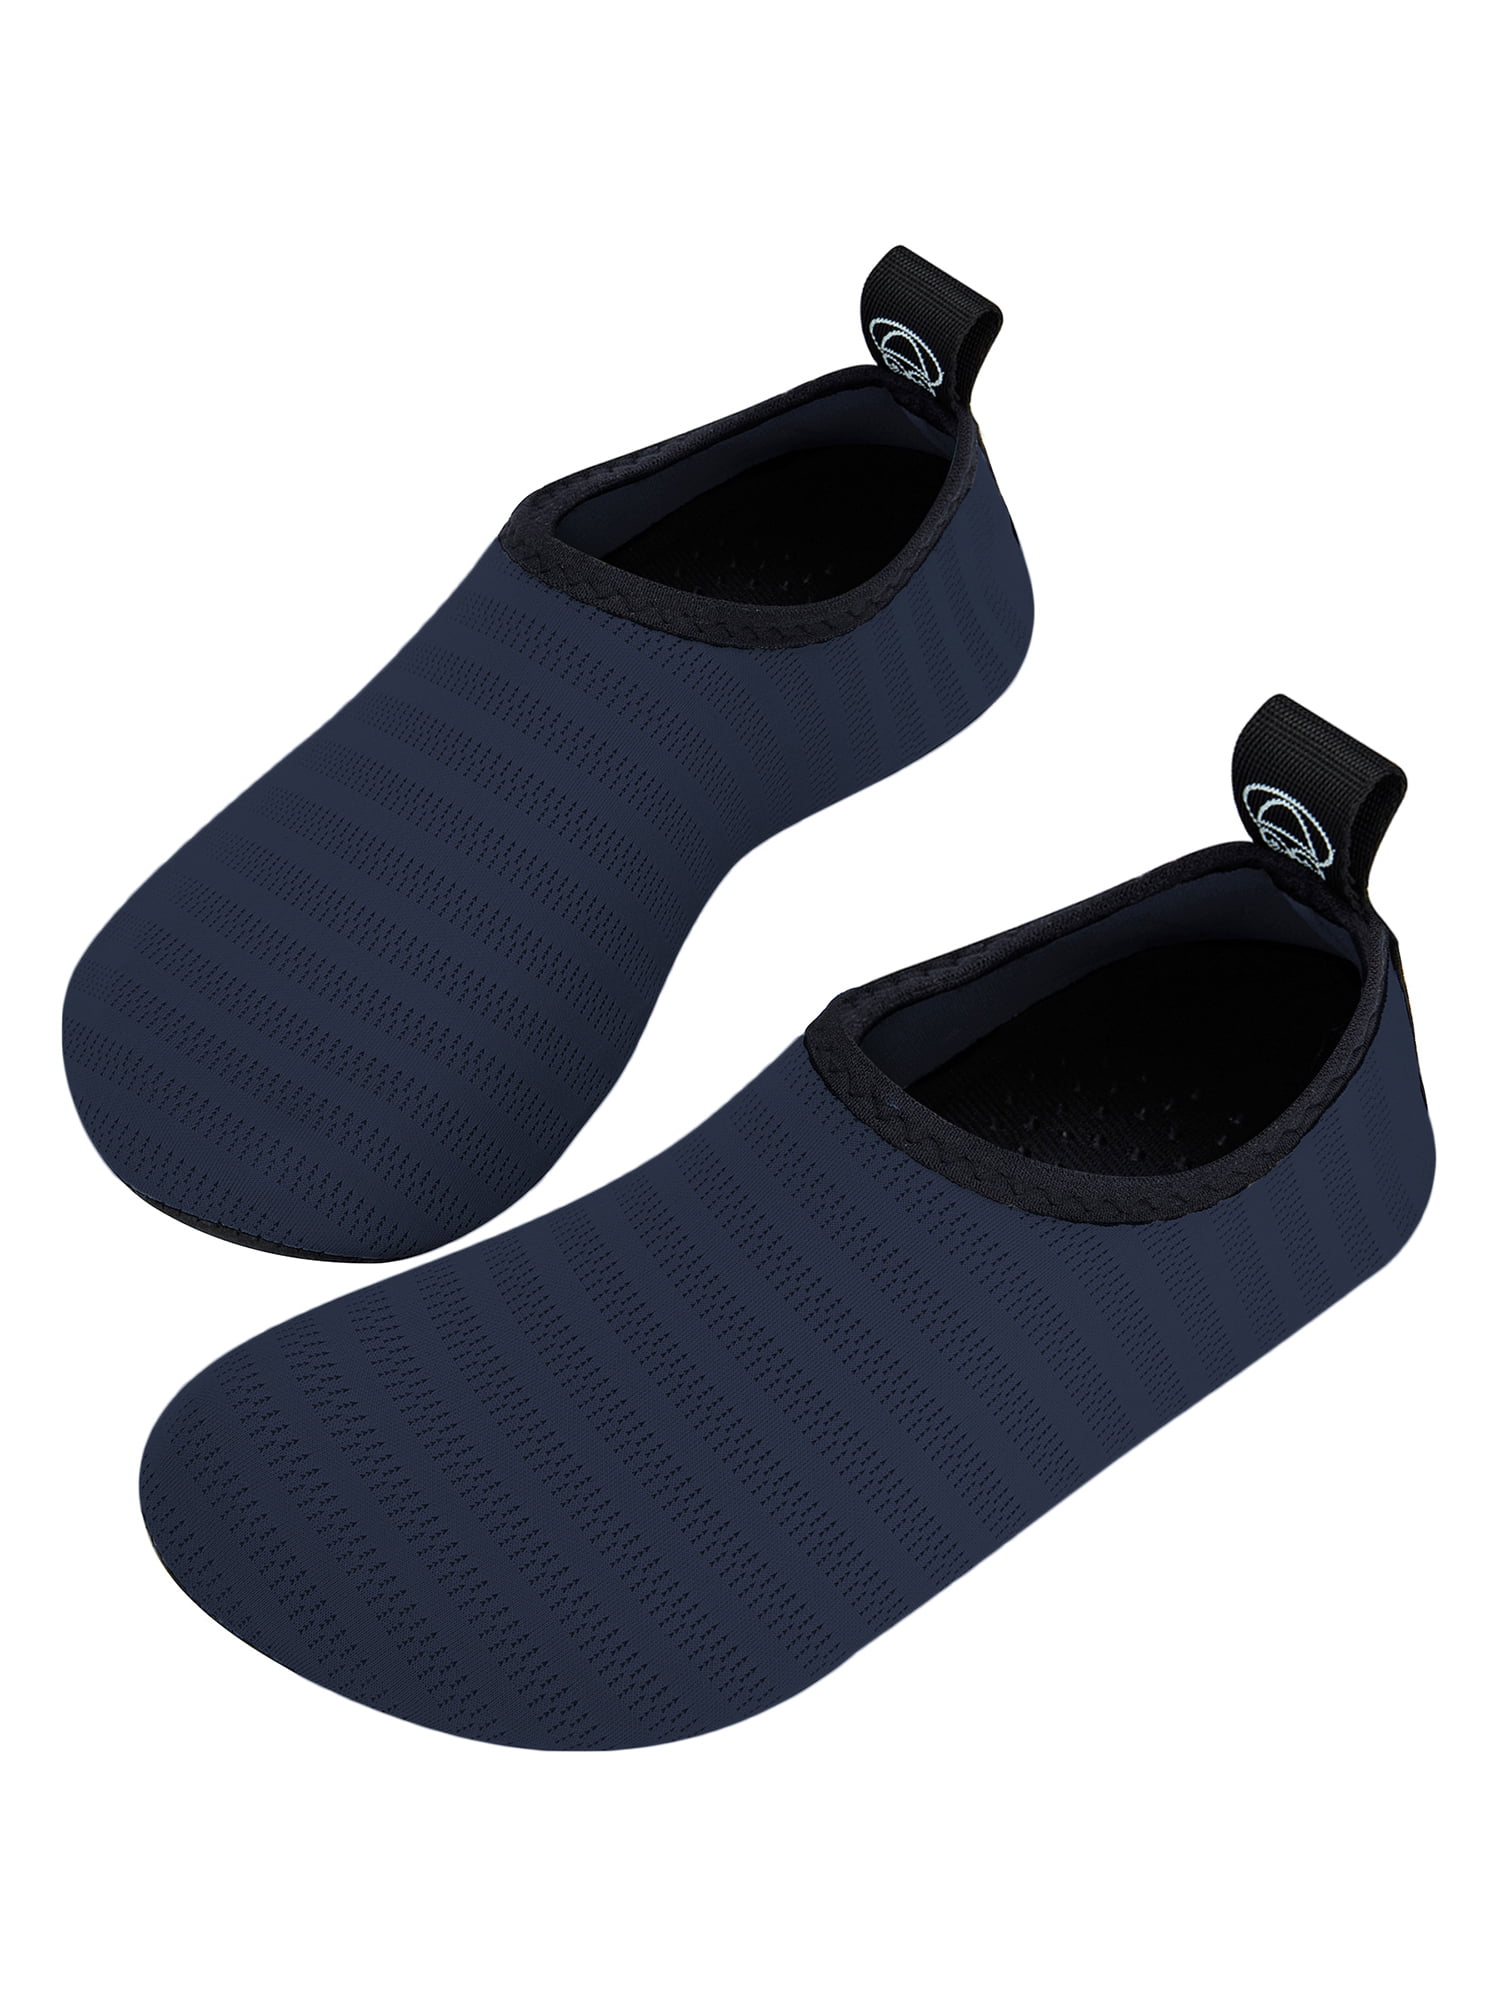 Men Women Water Shoes Quick Dry Adult Beach Swim Barefoot Lightweight Aqua Shoes for Swim Surf Exercise 